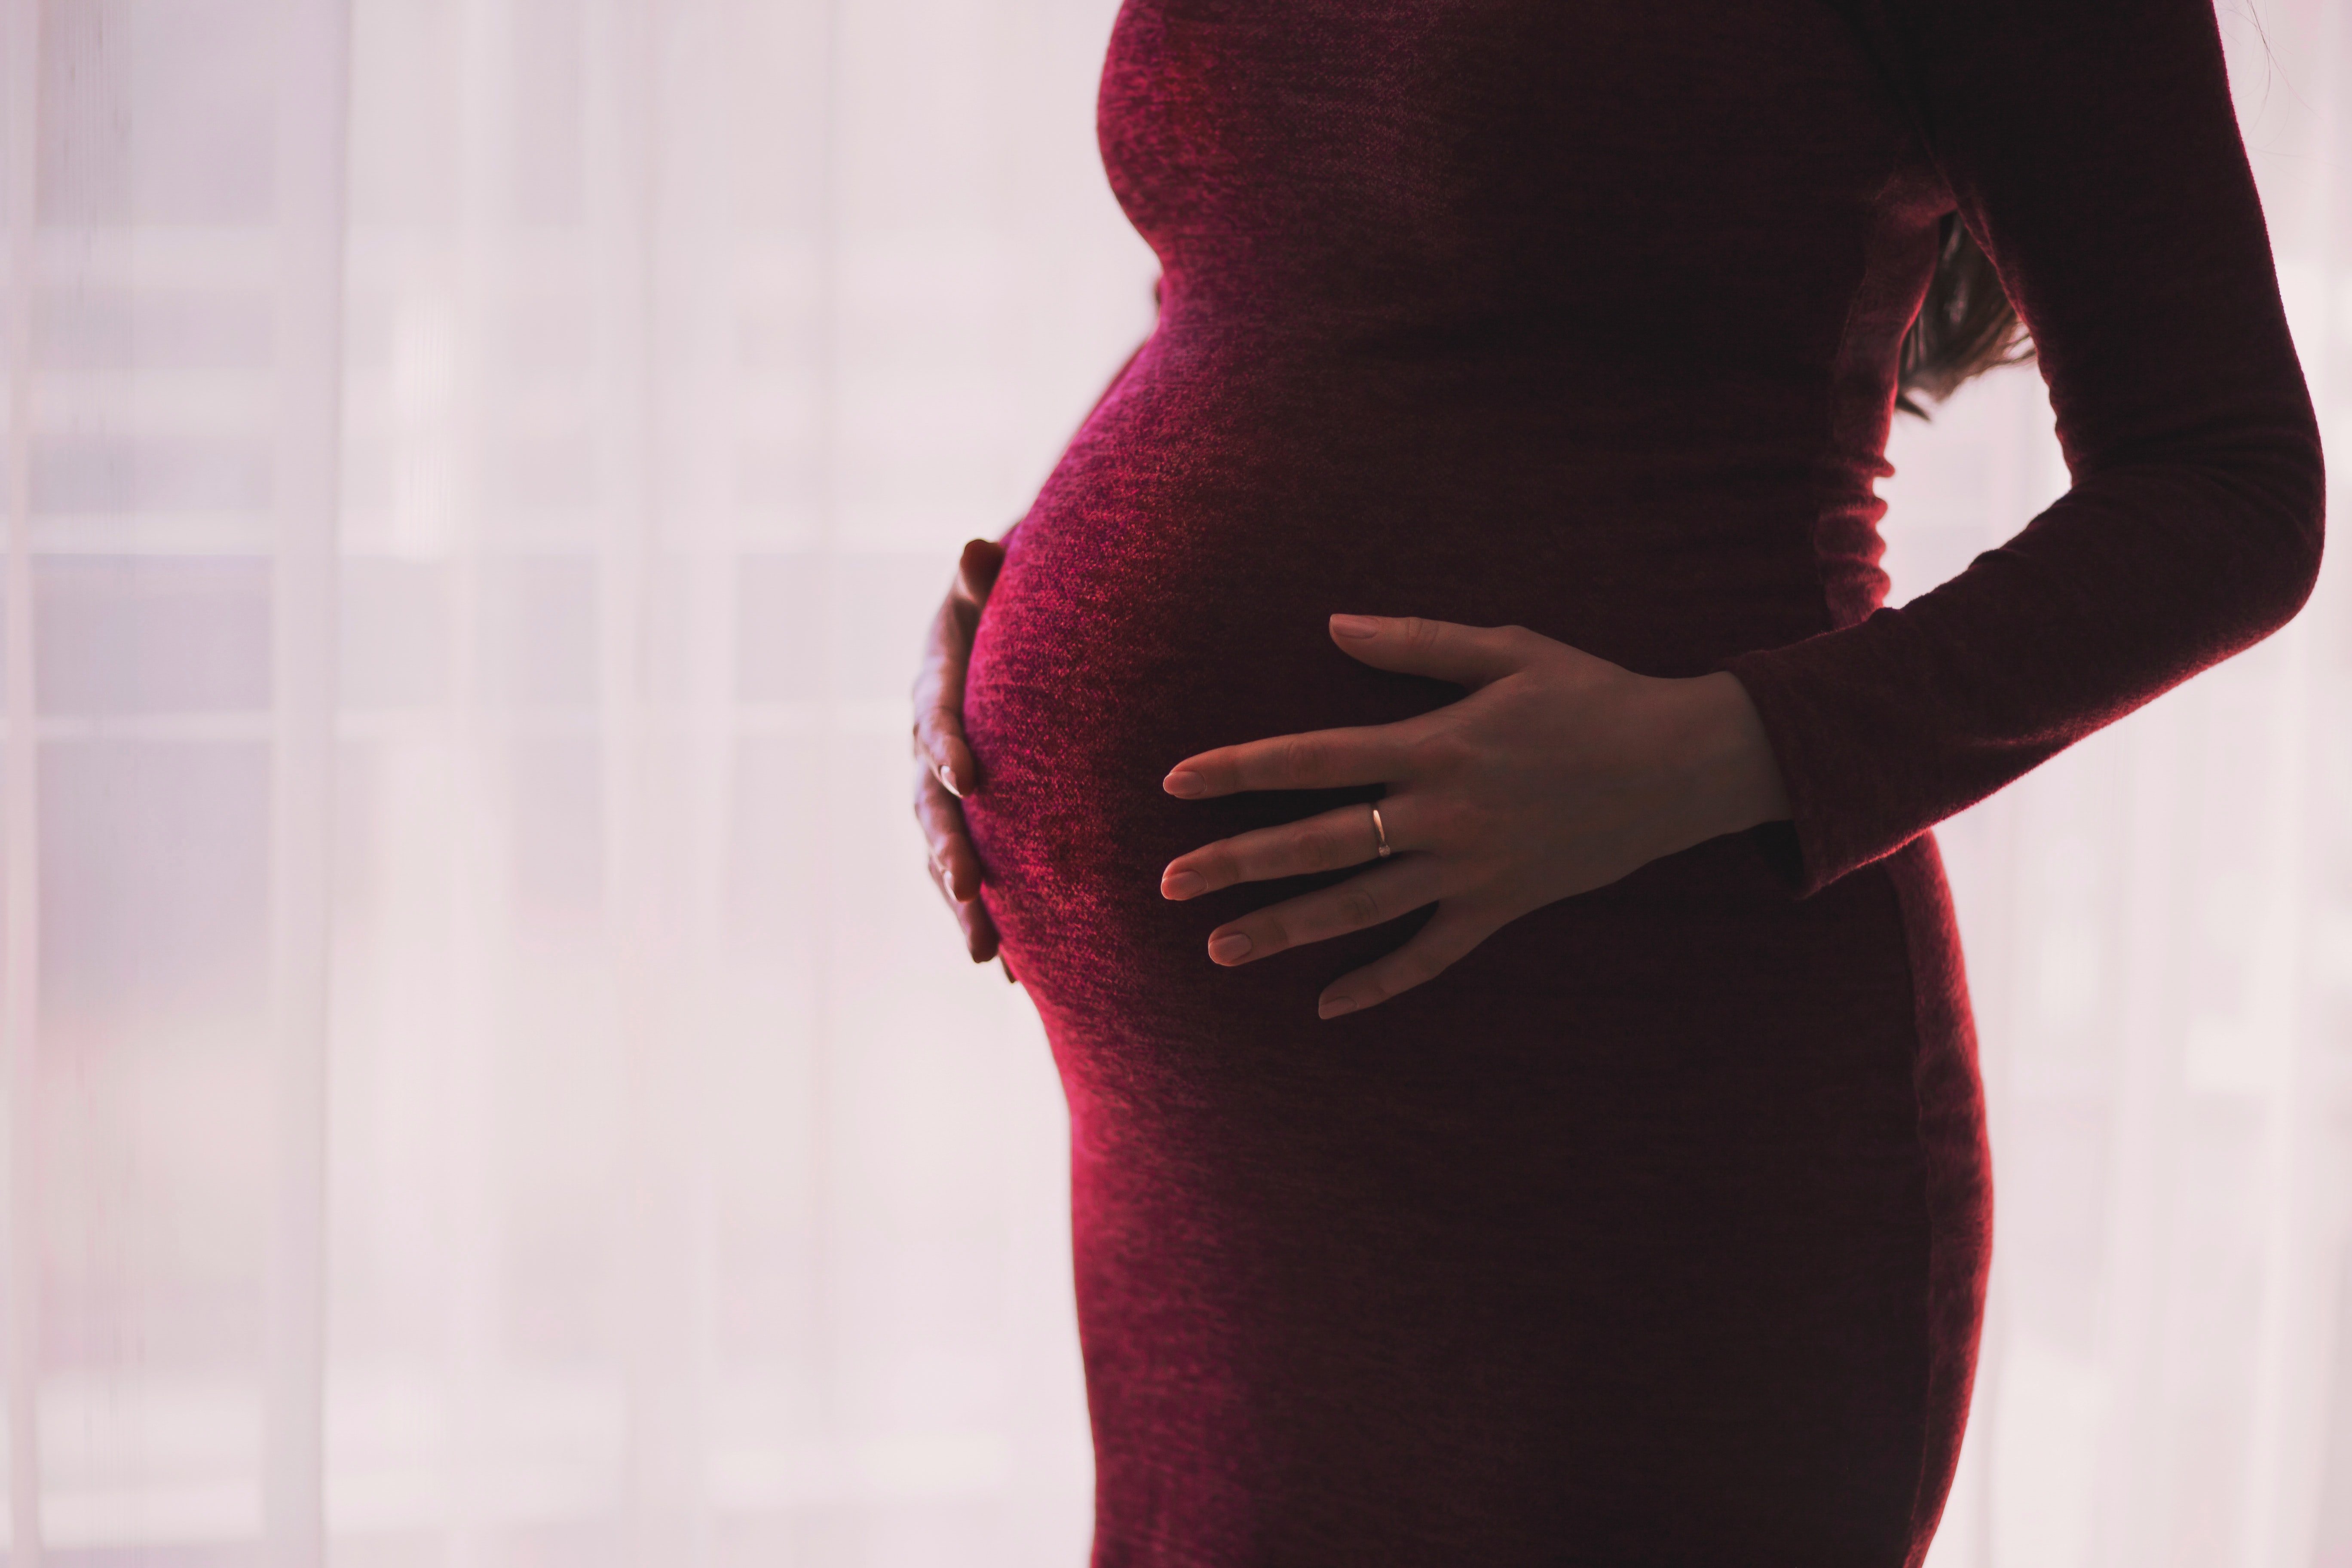 Rachel carried her pregnancy to term. | Source: Unsplash